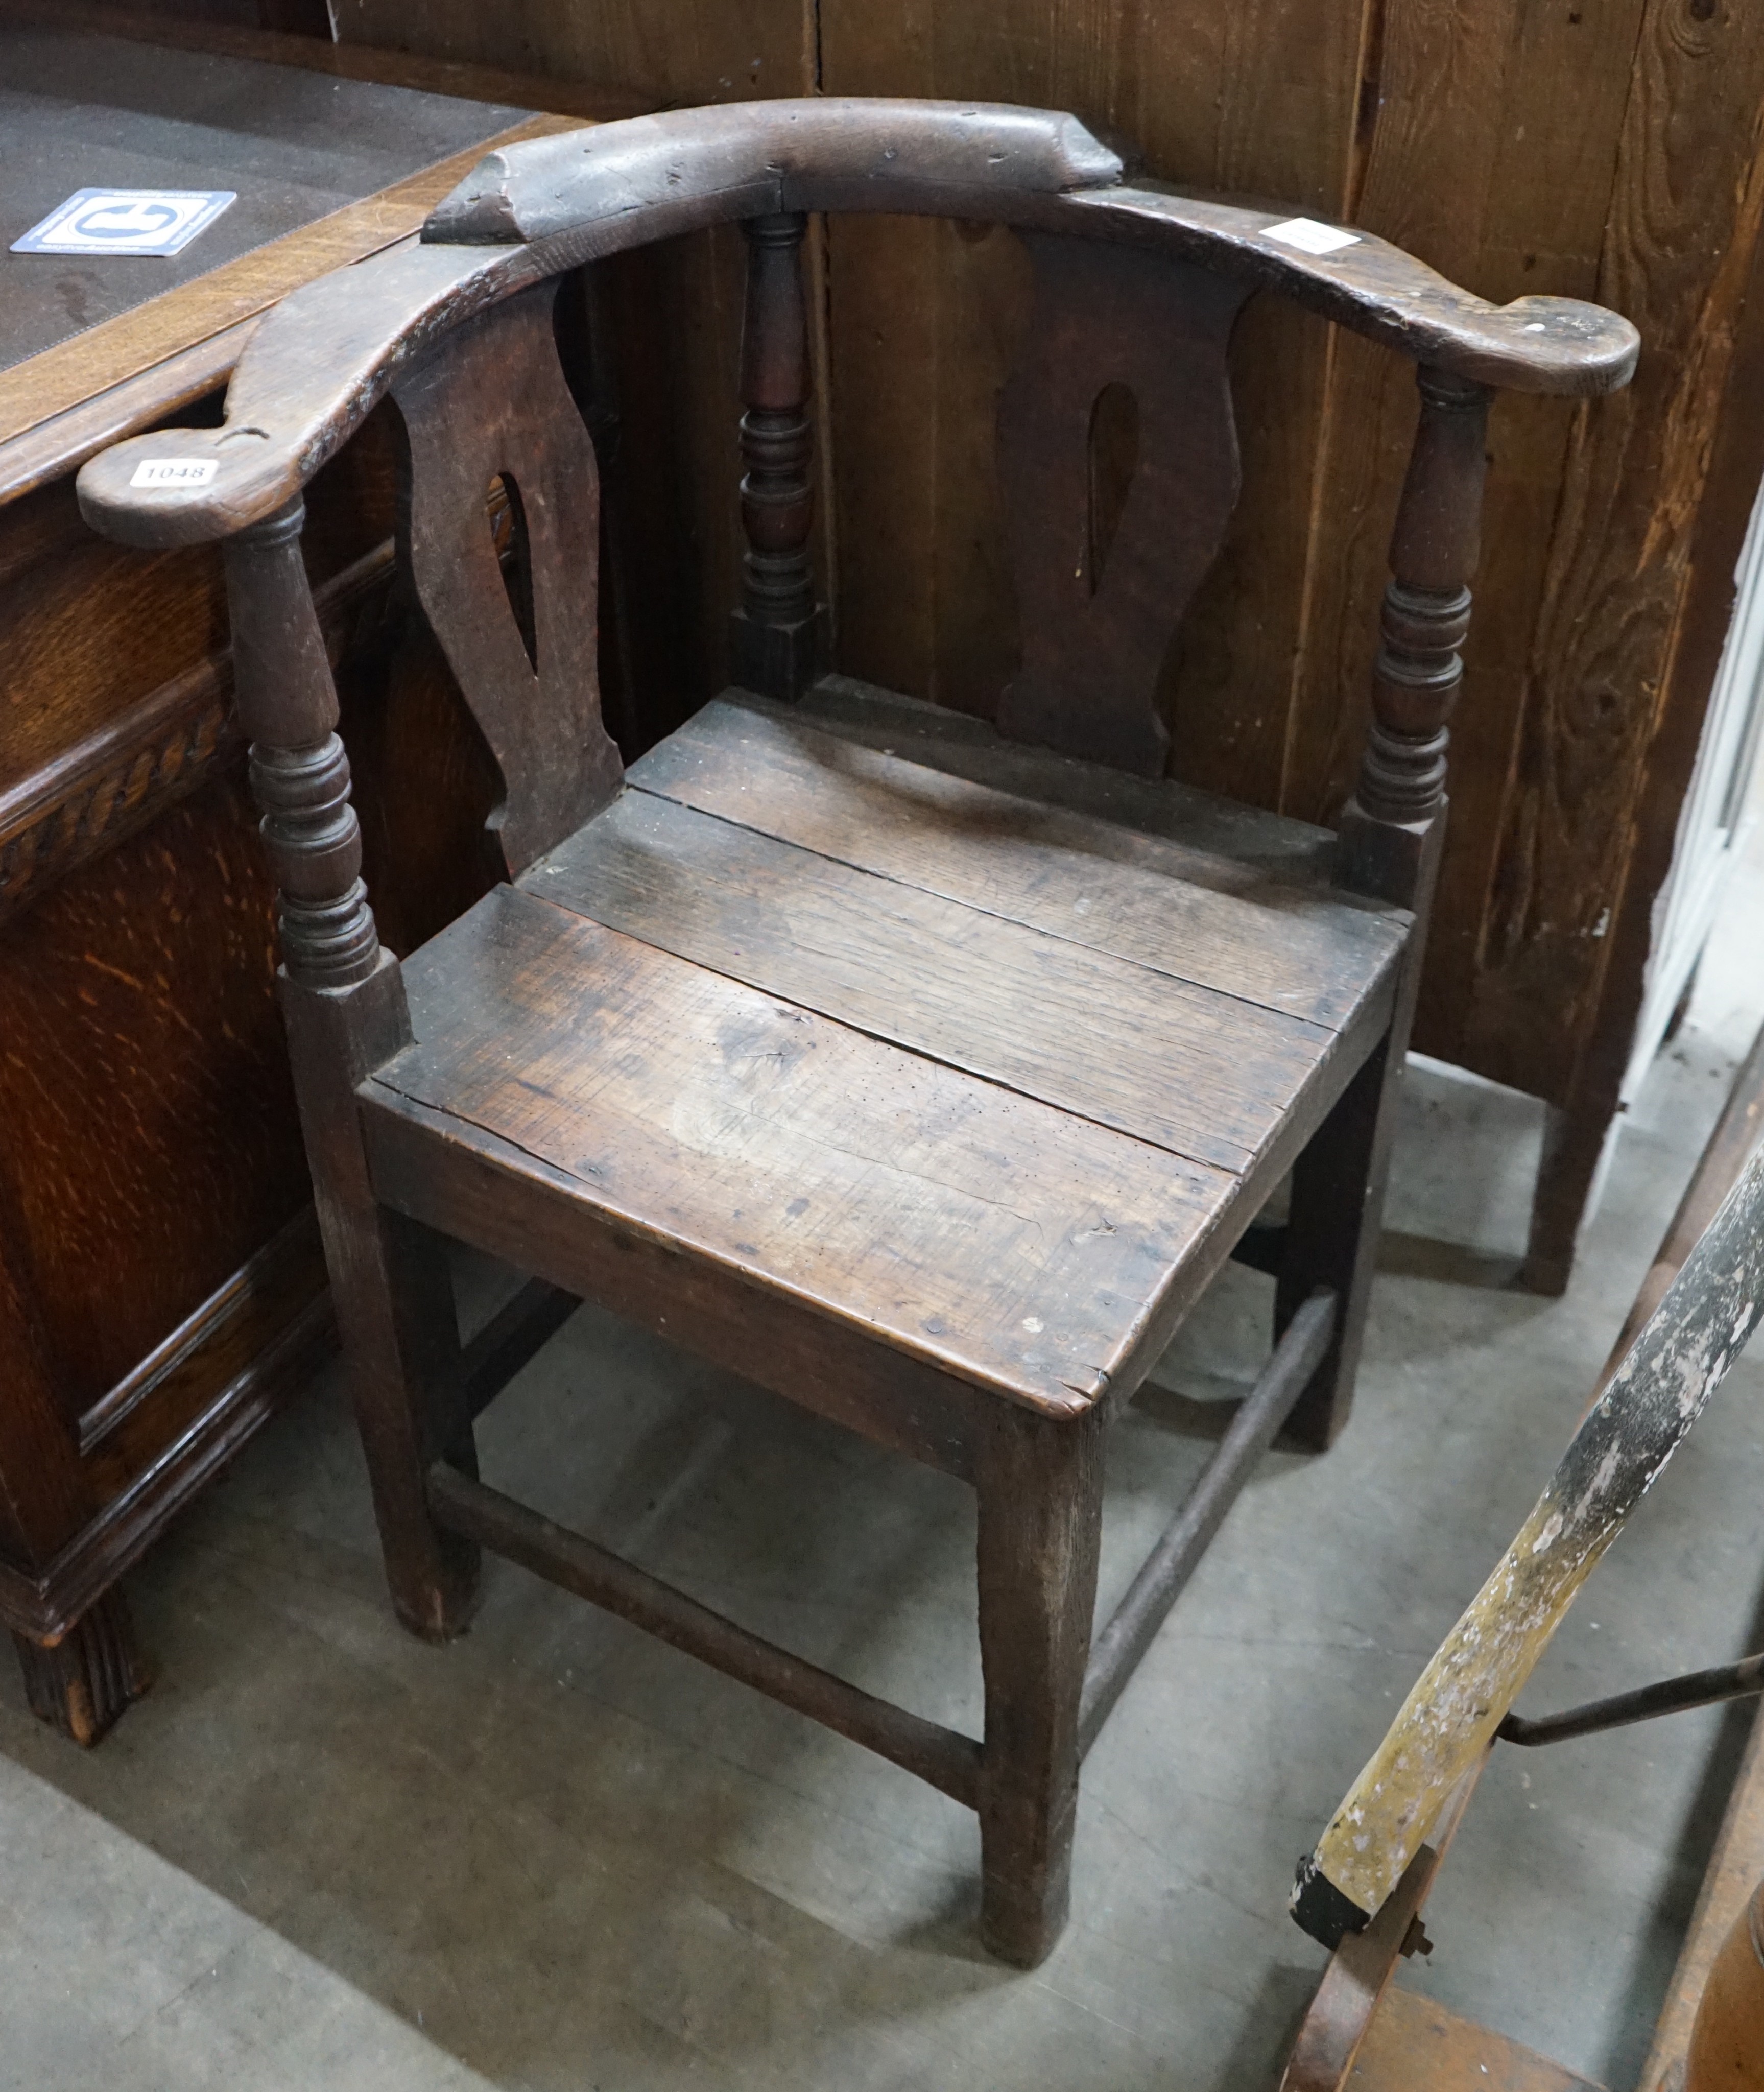 A mid 18th century oak corner elbow chair